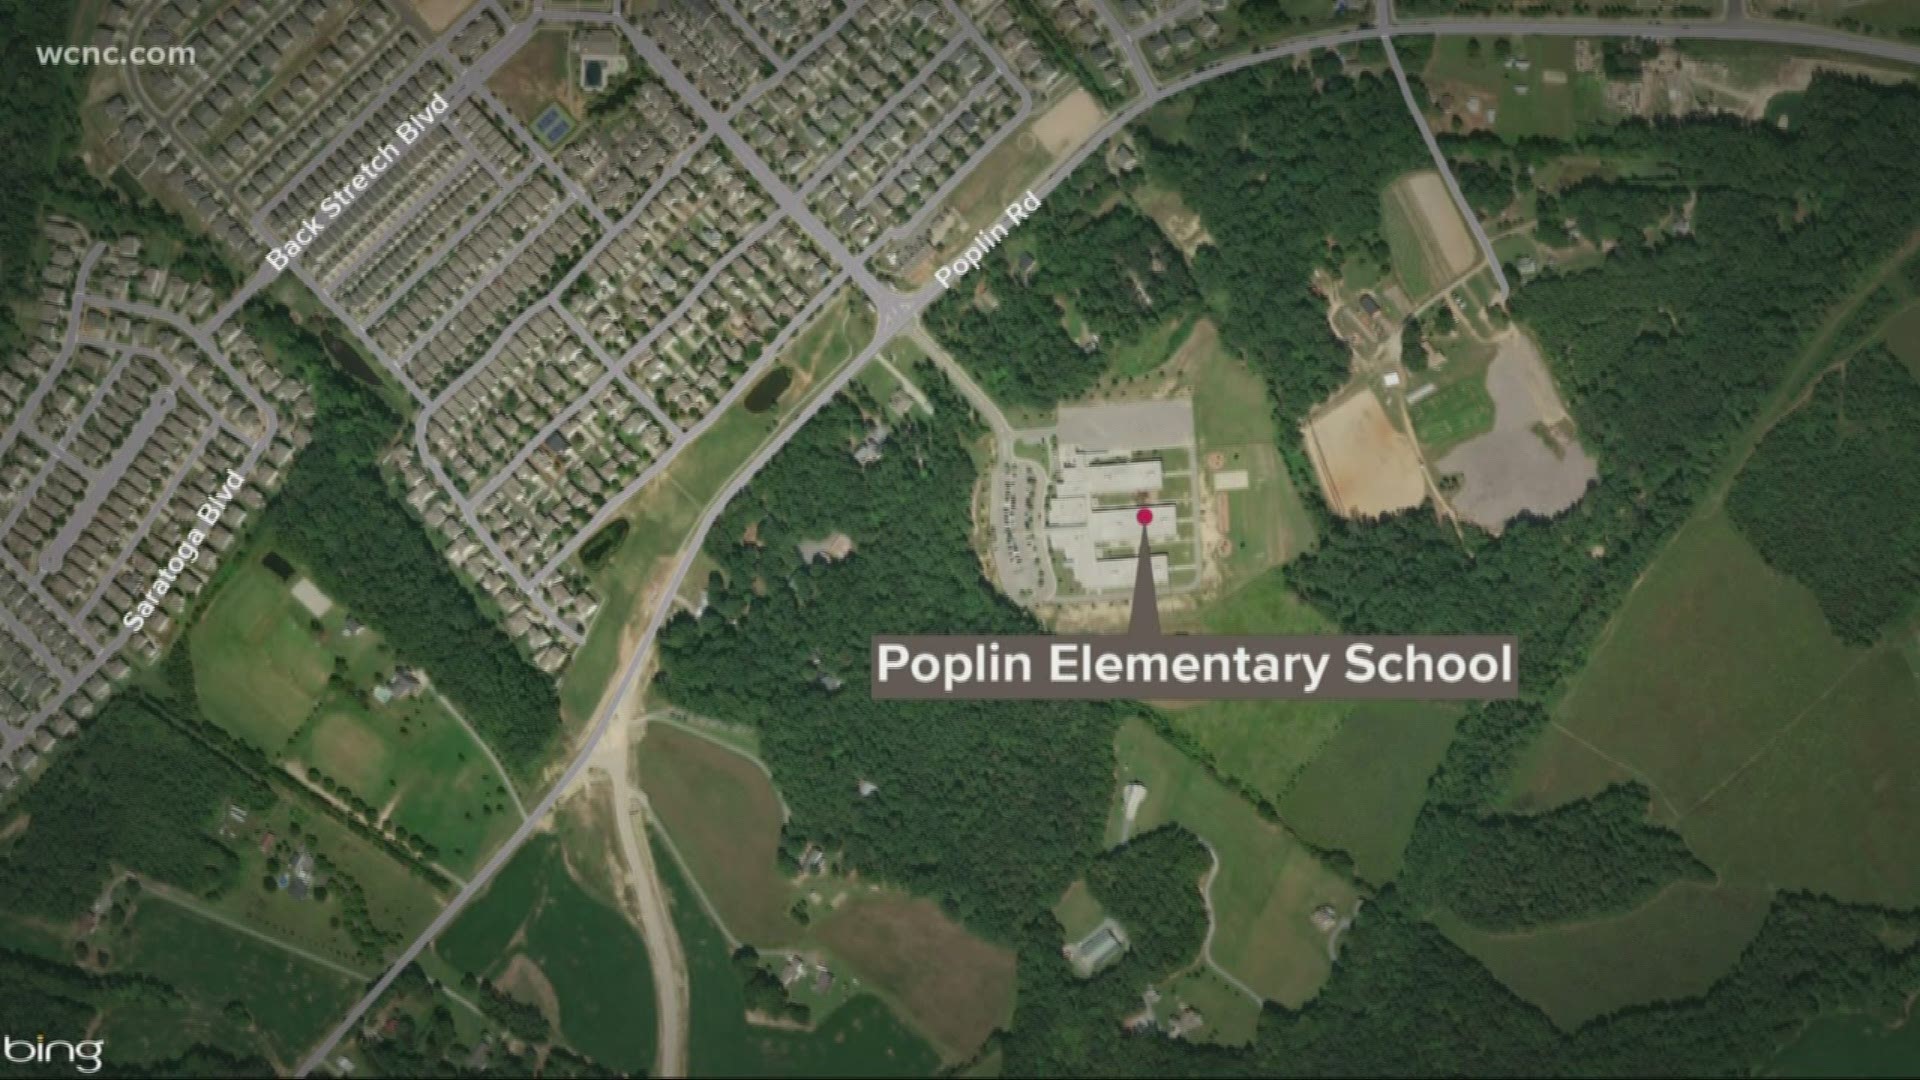 A handgun was found Tuesday outside Poplin Elementary School in Indian Trail by a kindergarten class on a nature walk.